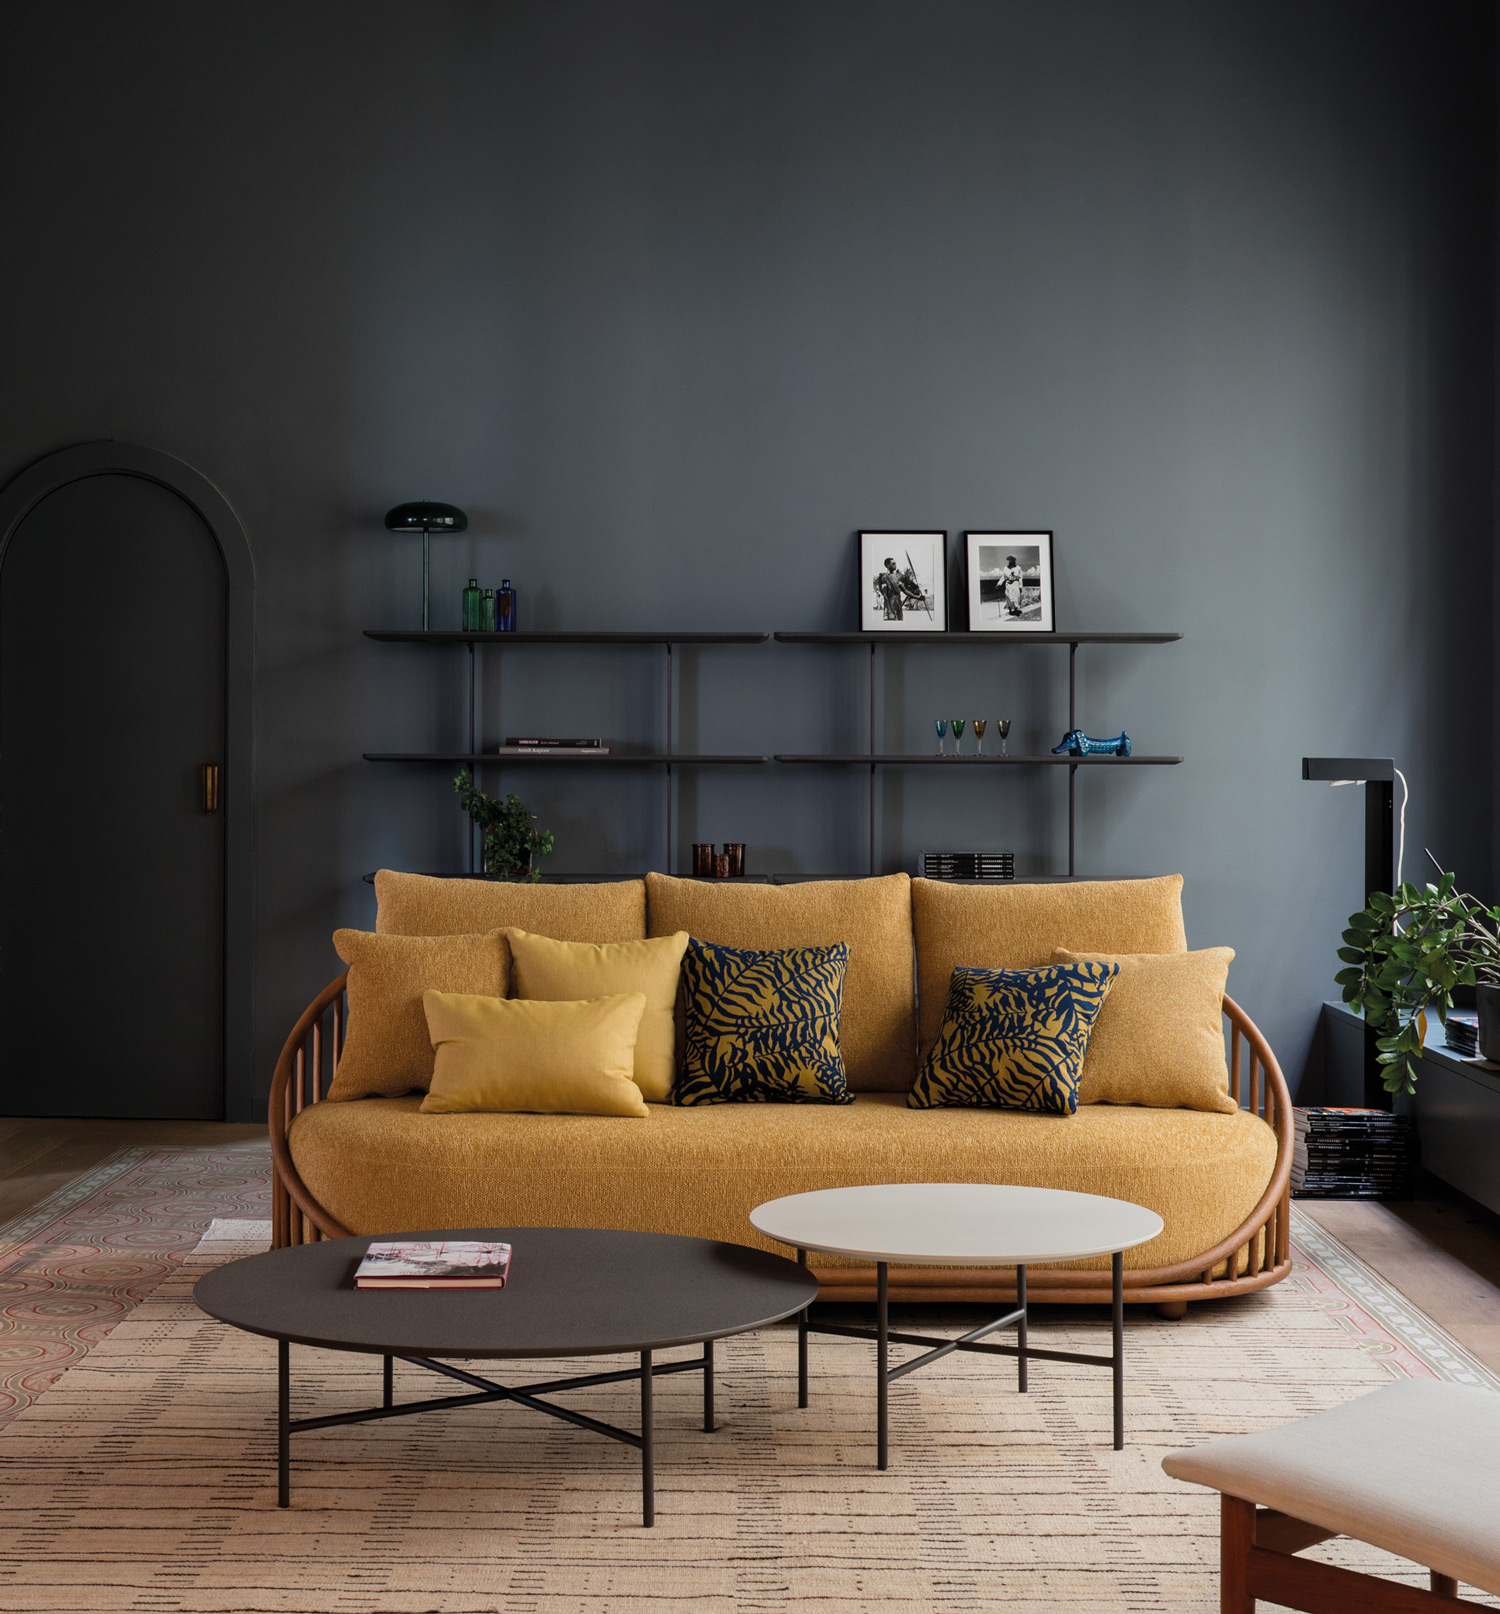 indoor kollektion - sofas - sofa cask